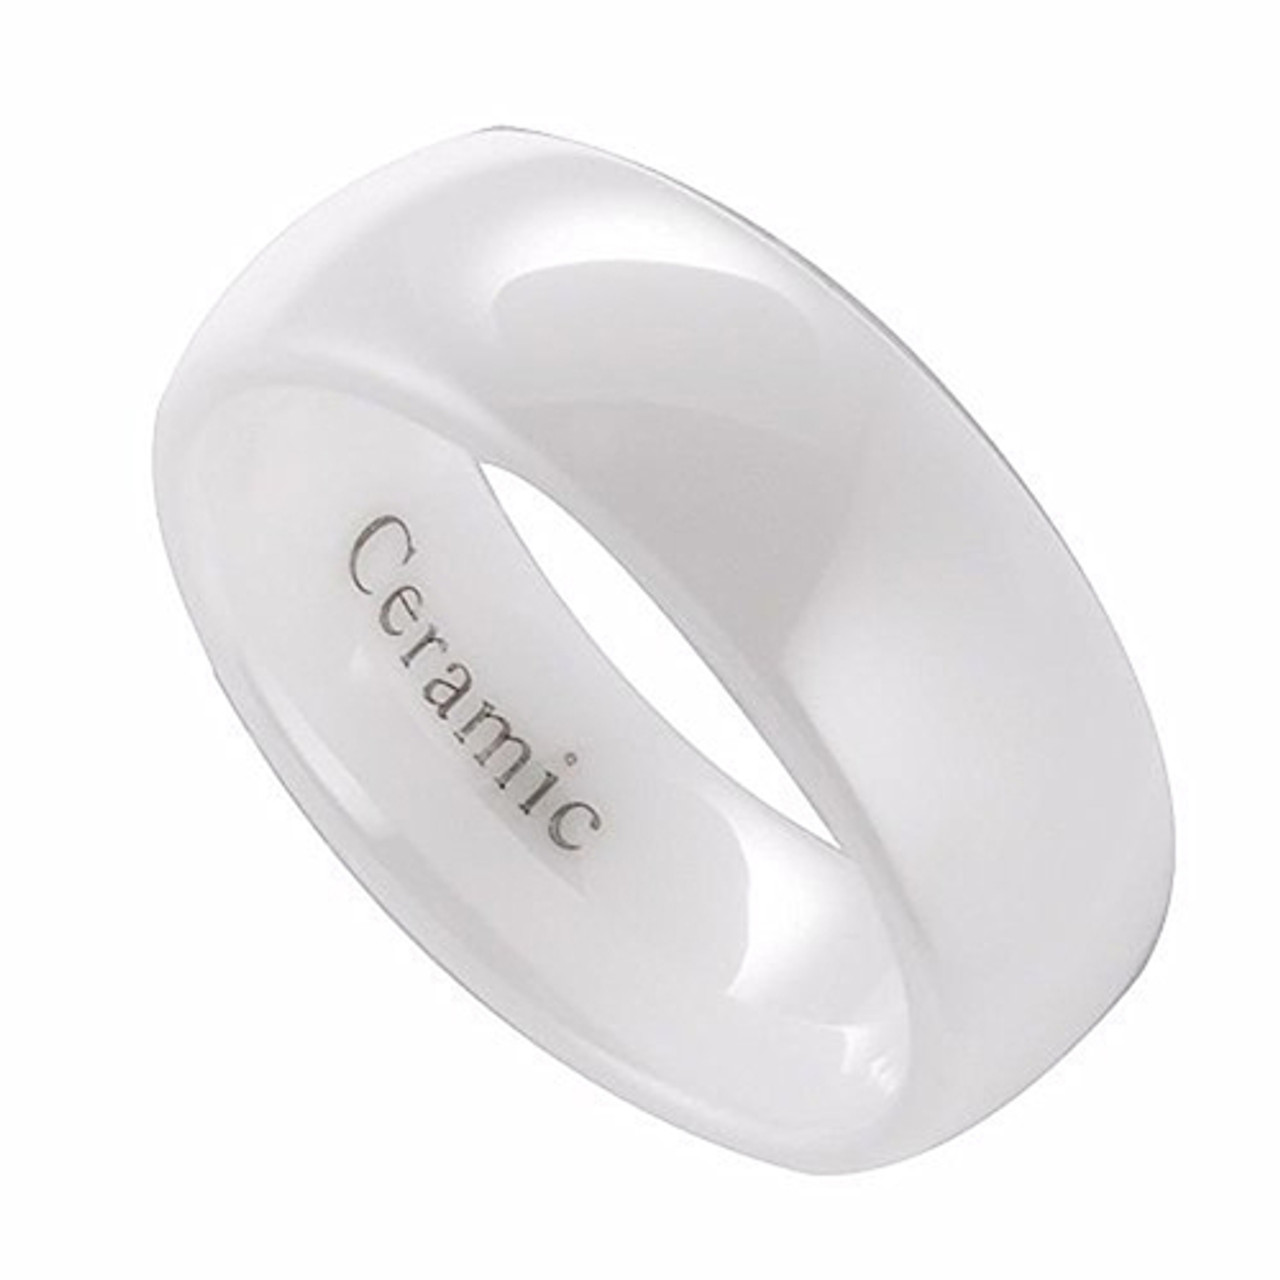 (8mm) Unisex or Men's Ceramic Wedding Ring Bands White. High Polish Domed Top Ring.